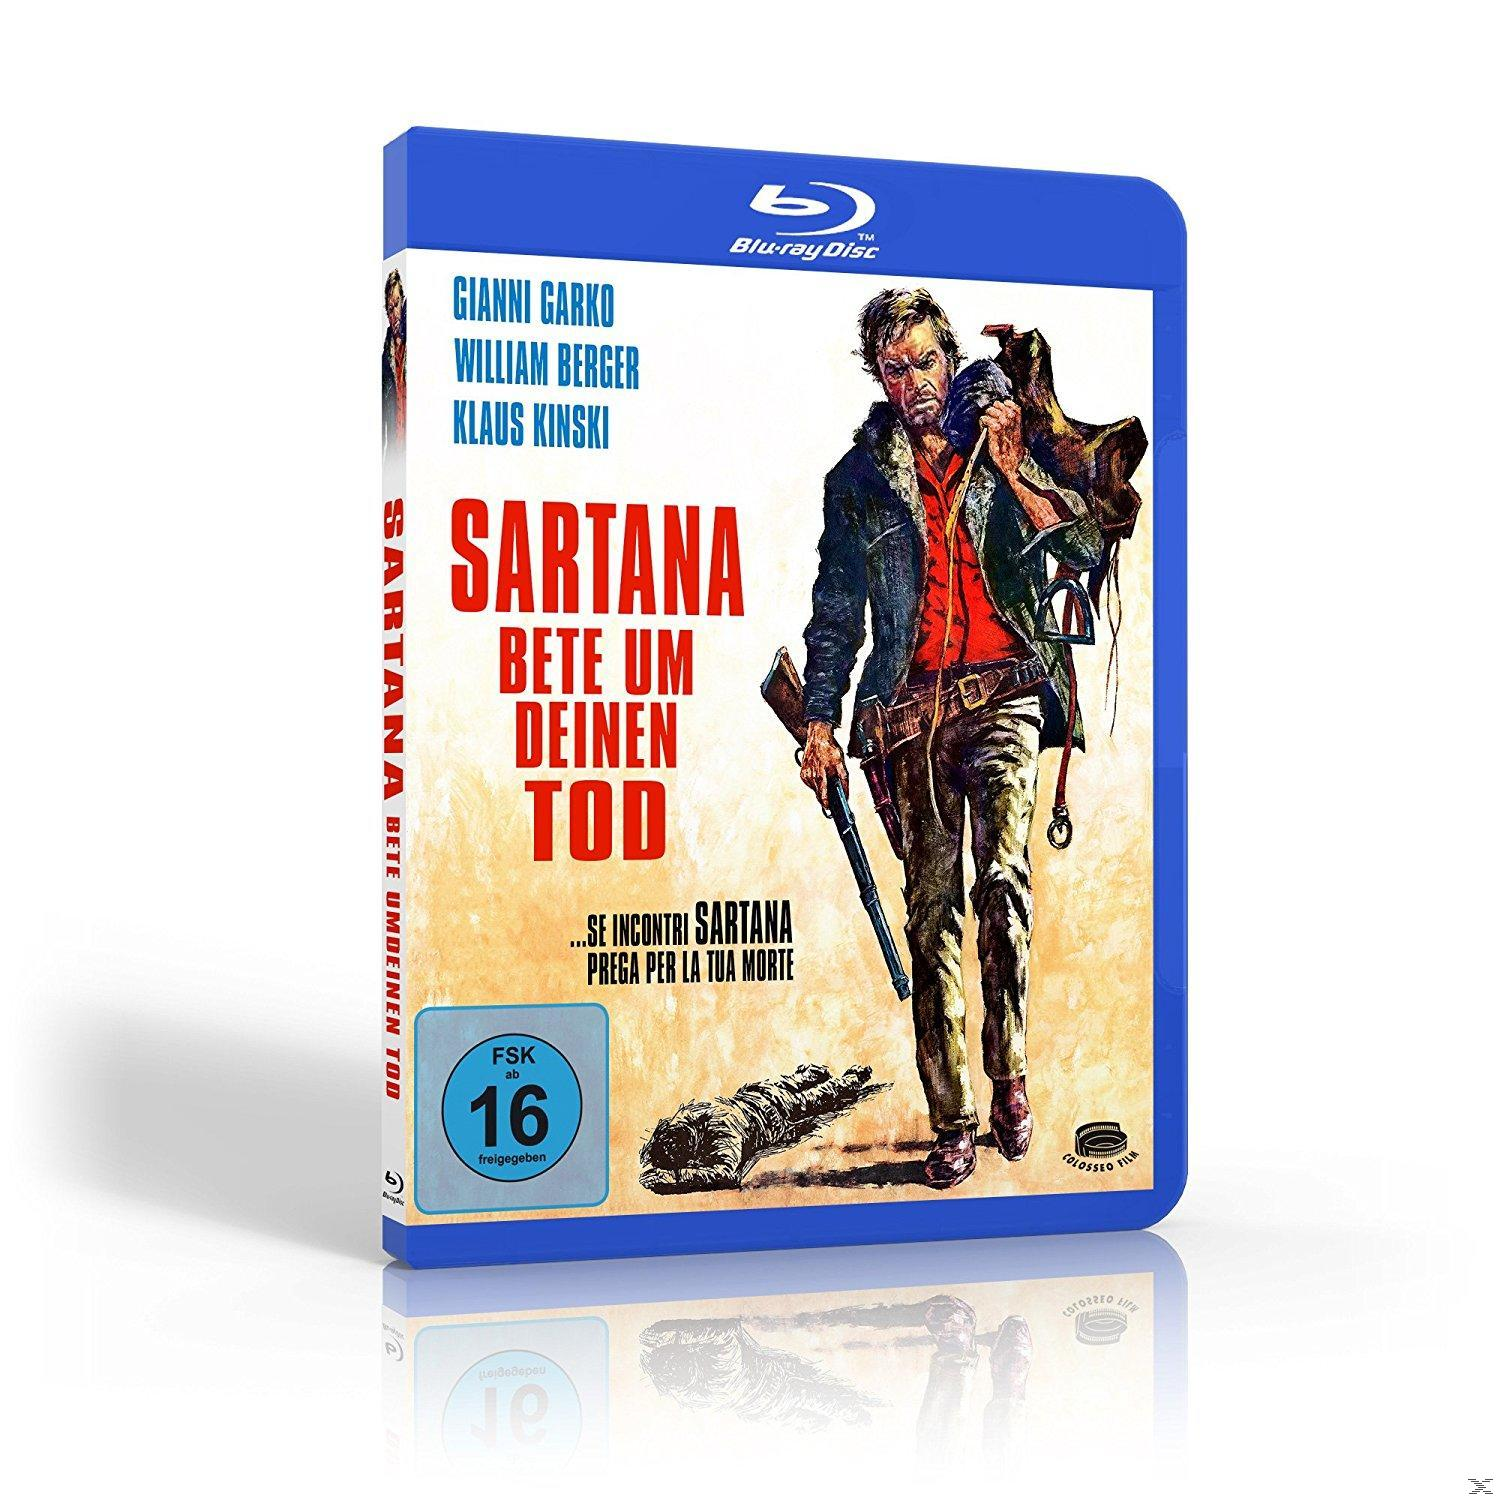 deinen Tod Bete um - Blu-ray Sartana